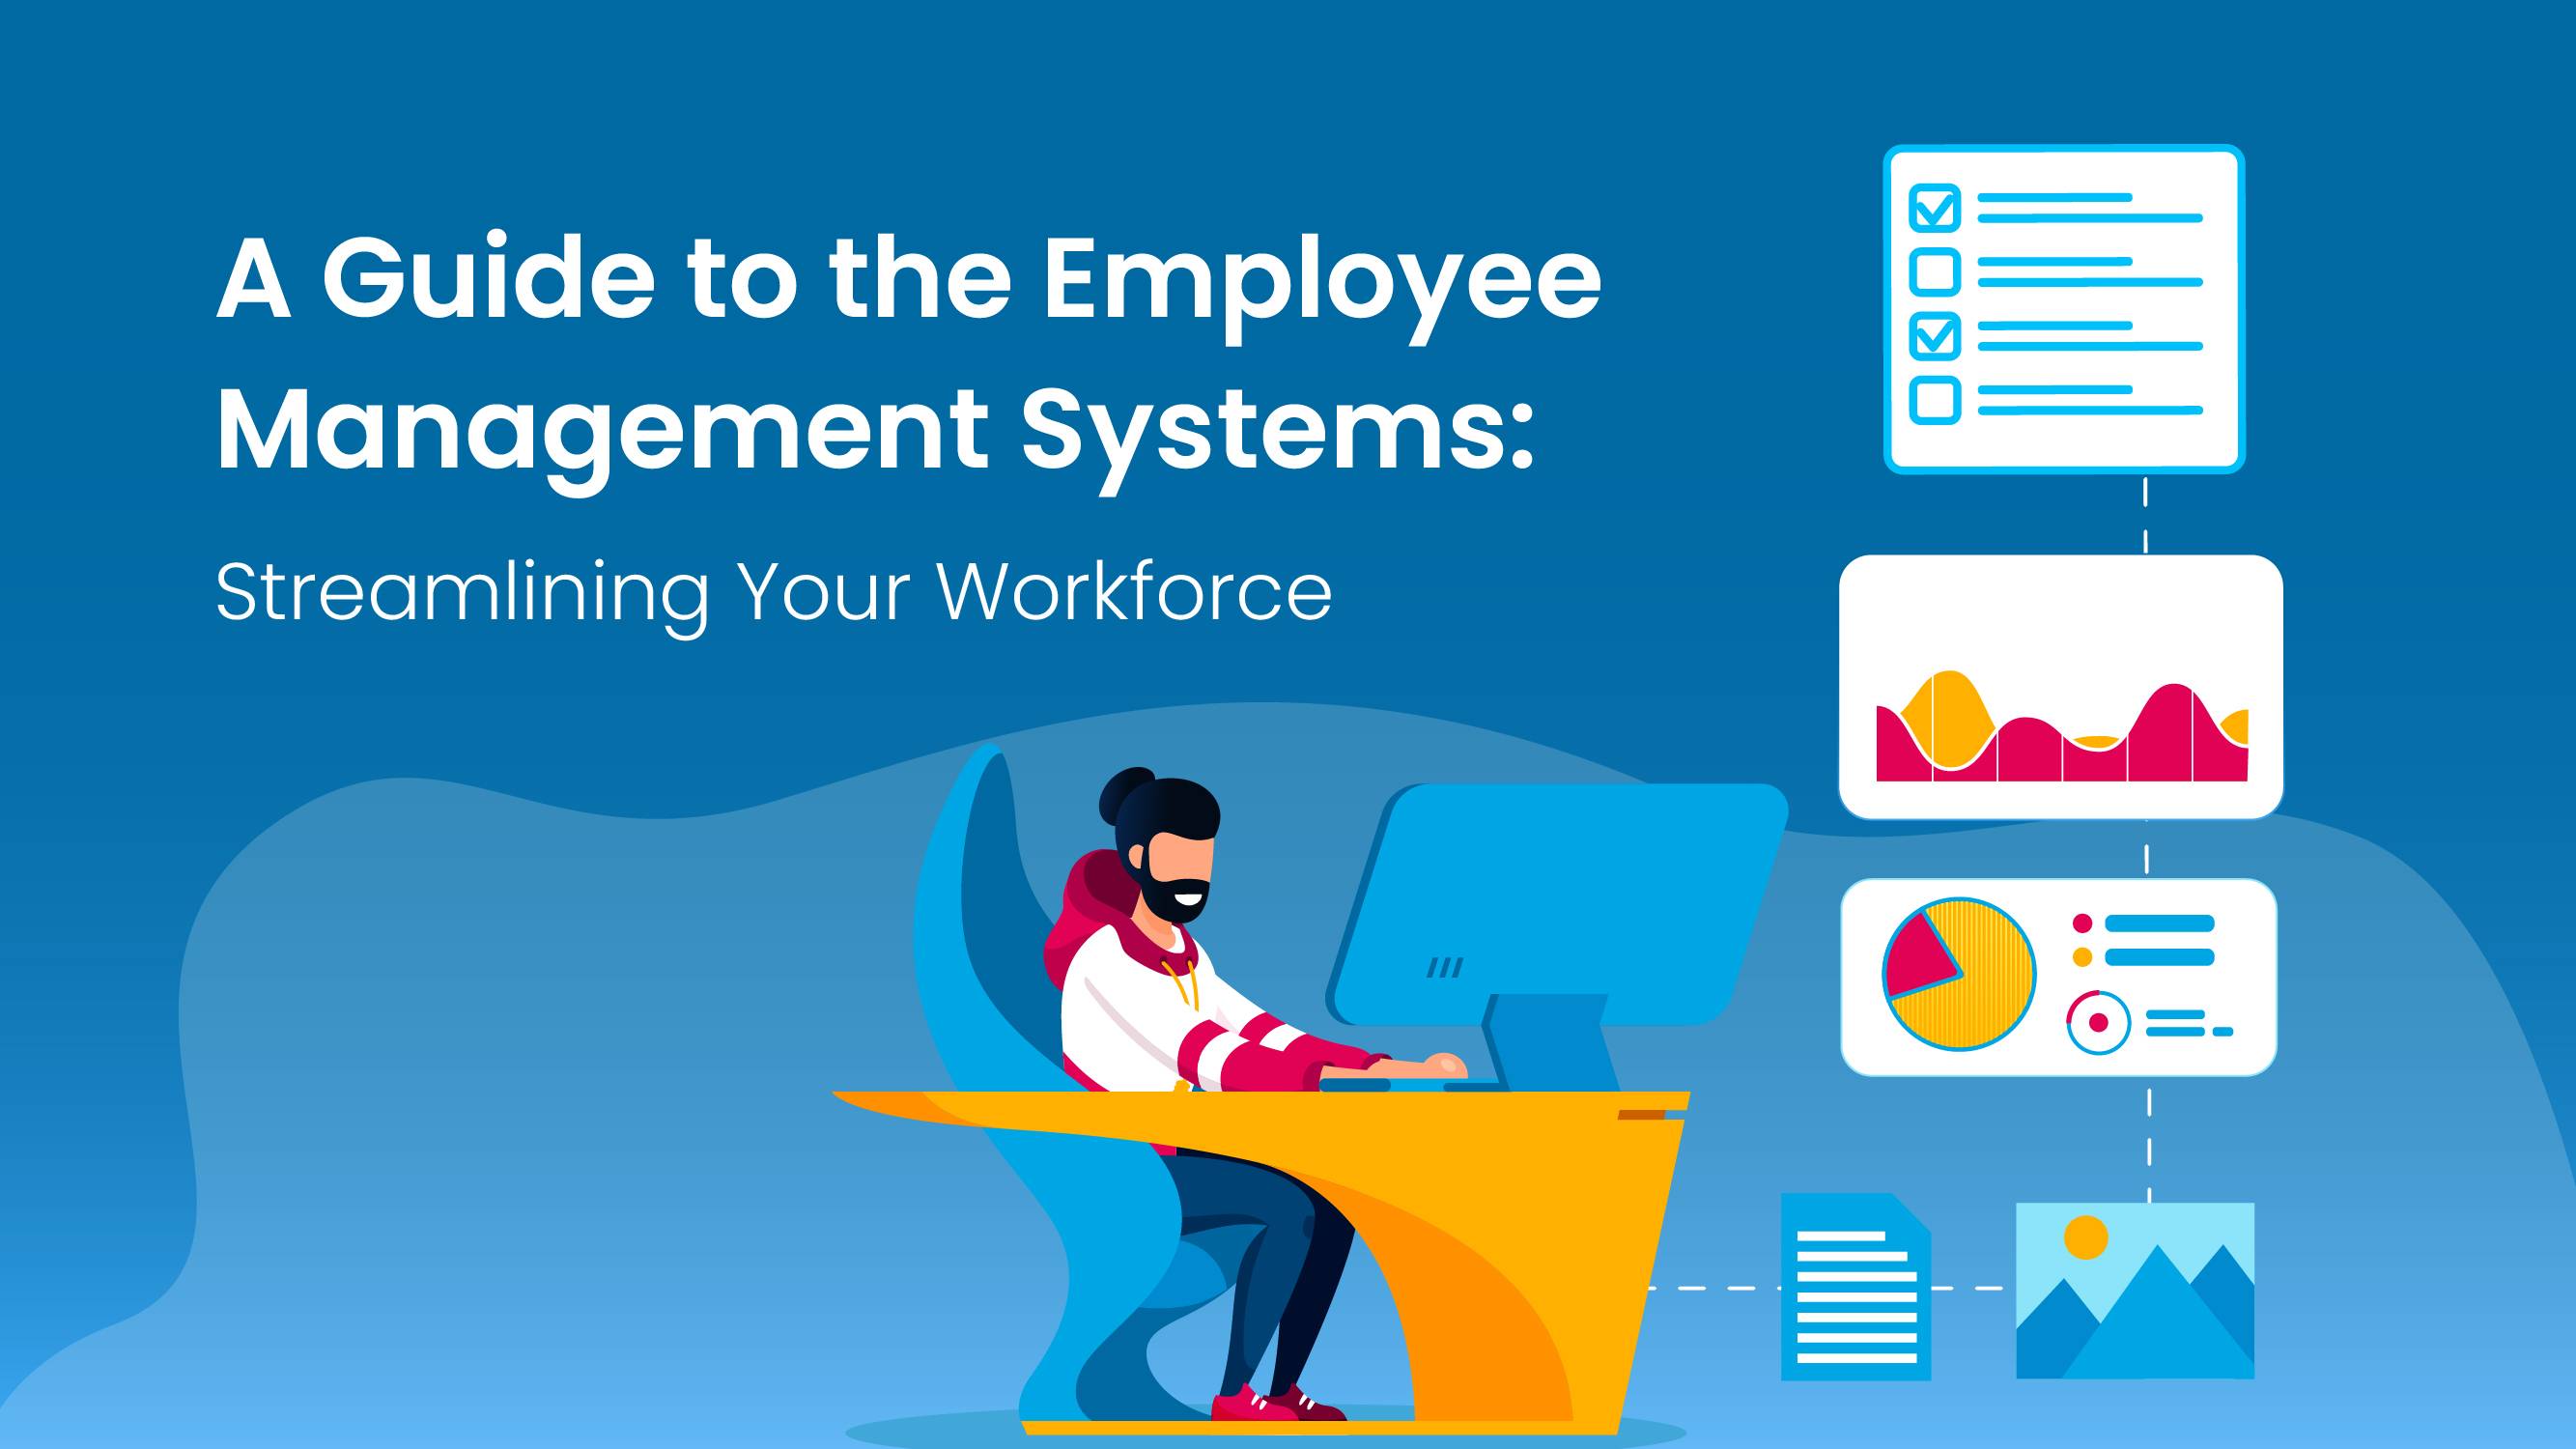 Employee management software